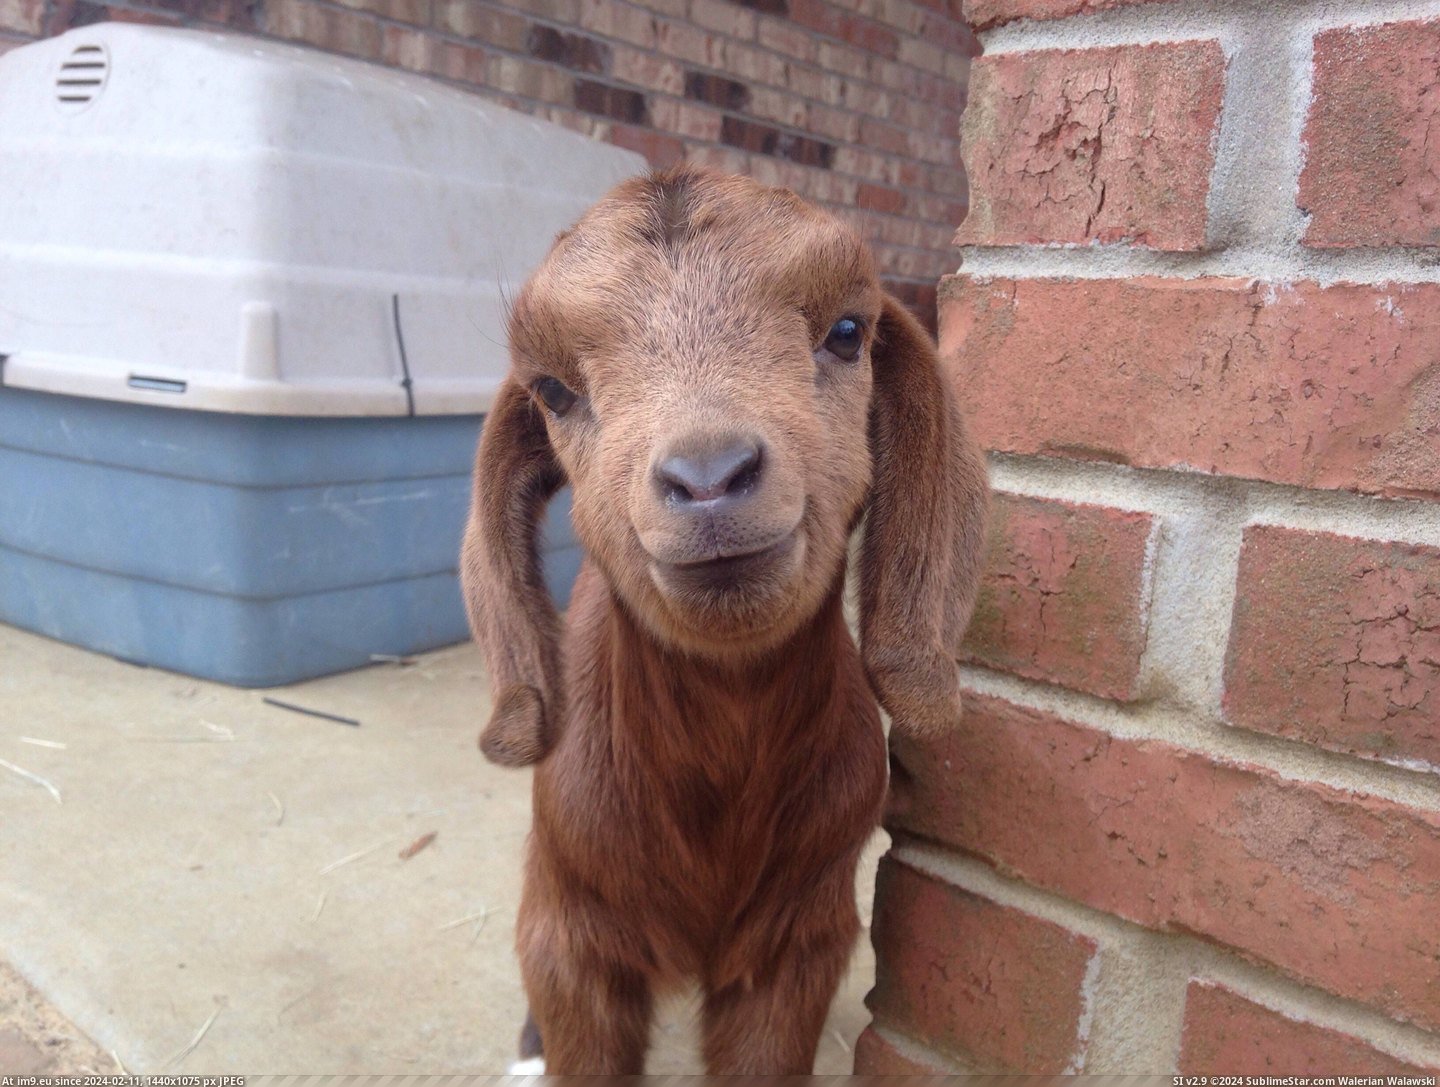 #Old #Fresh #Goat #Weeks [Aww] Fresh Goat, less than 2 weeks old Pic. (Изображение из альбом My r/AWW favs))